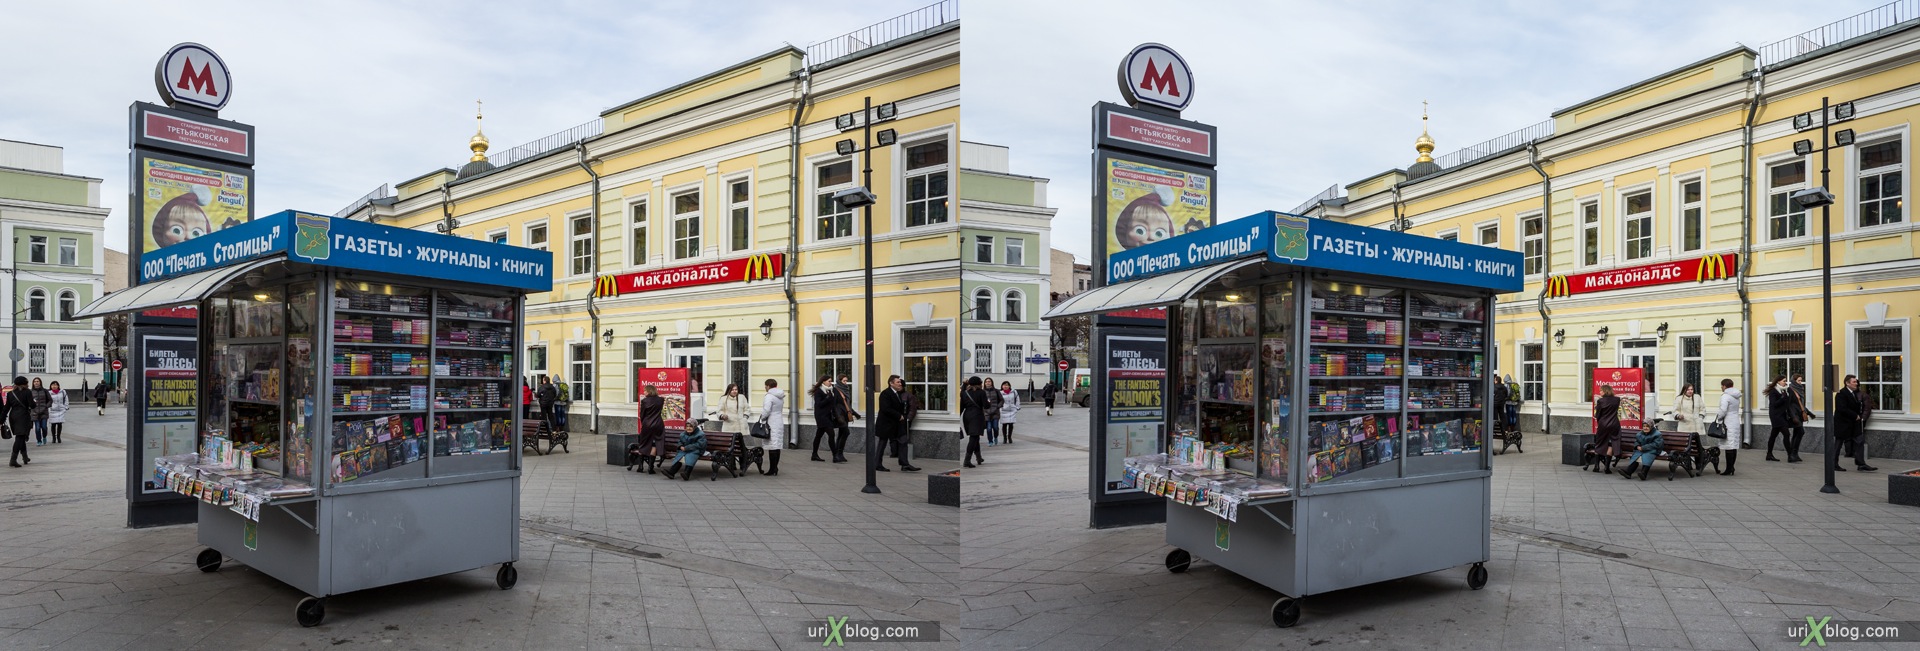 2013, Moscow, Russia, Tratjakovskaya, metro, square, street, new pedestrian zone, 3D, stereo pair, cross-eyed, crossview, cross view stereo pair, stereoscopic